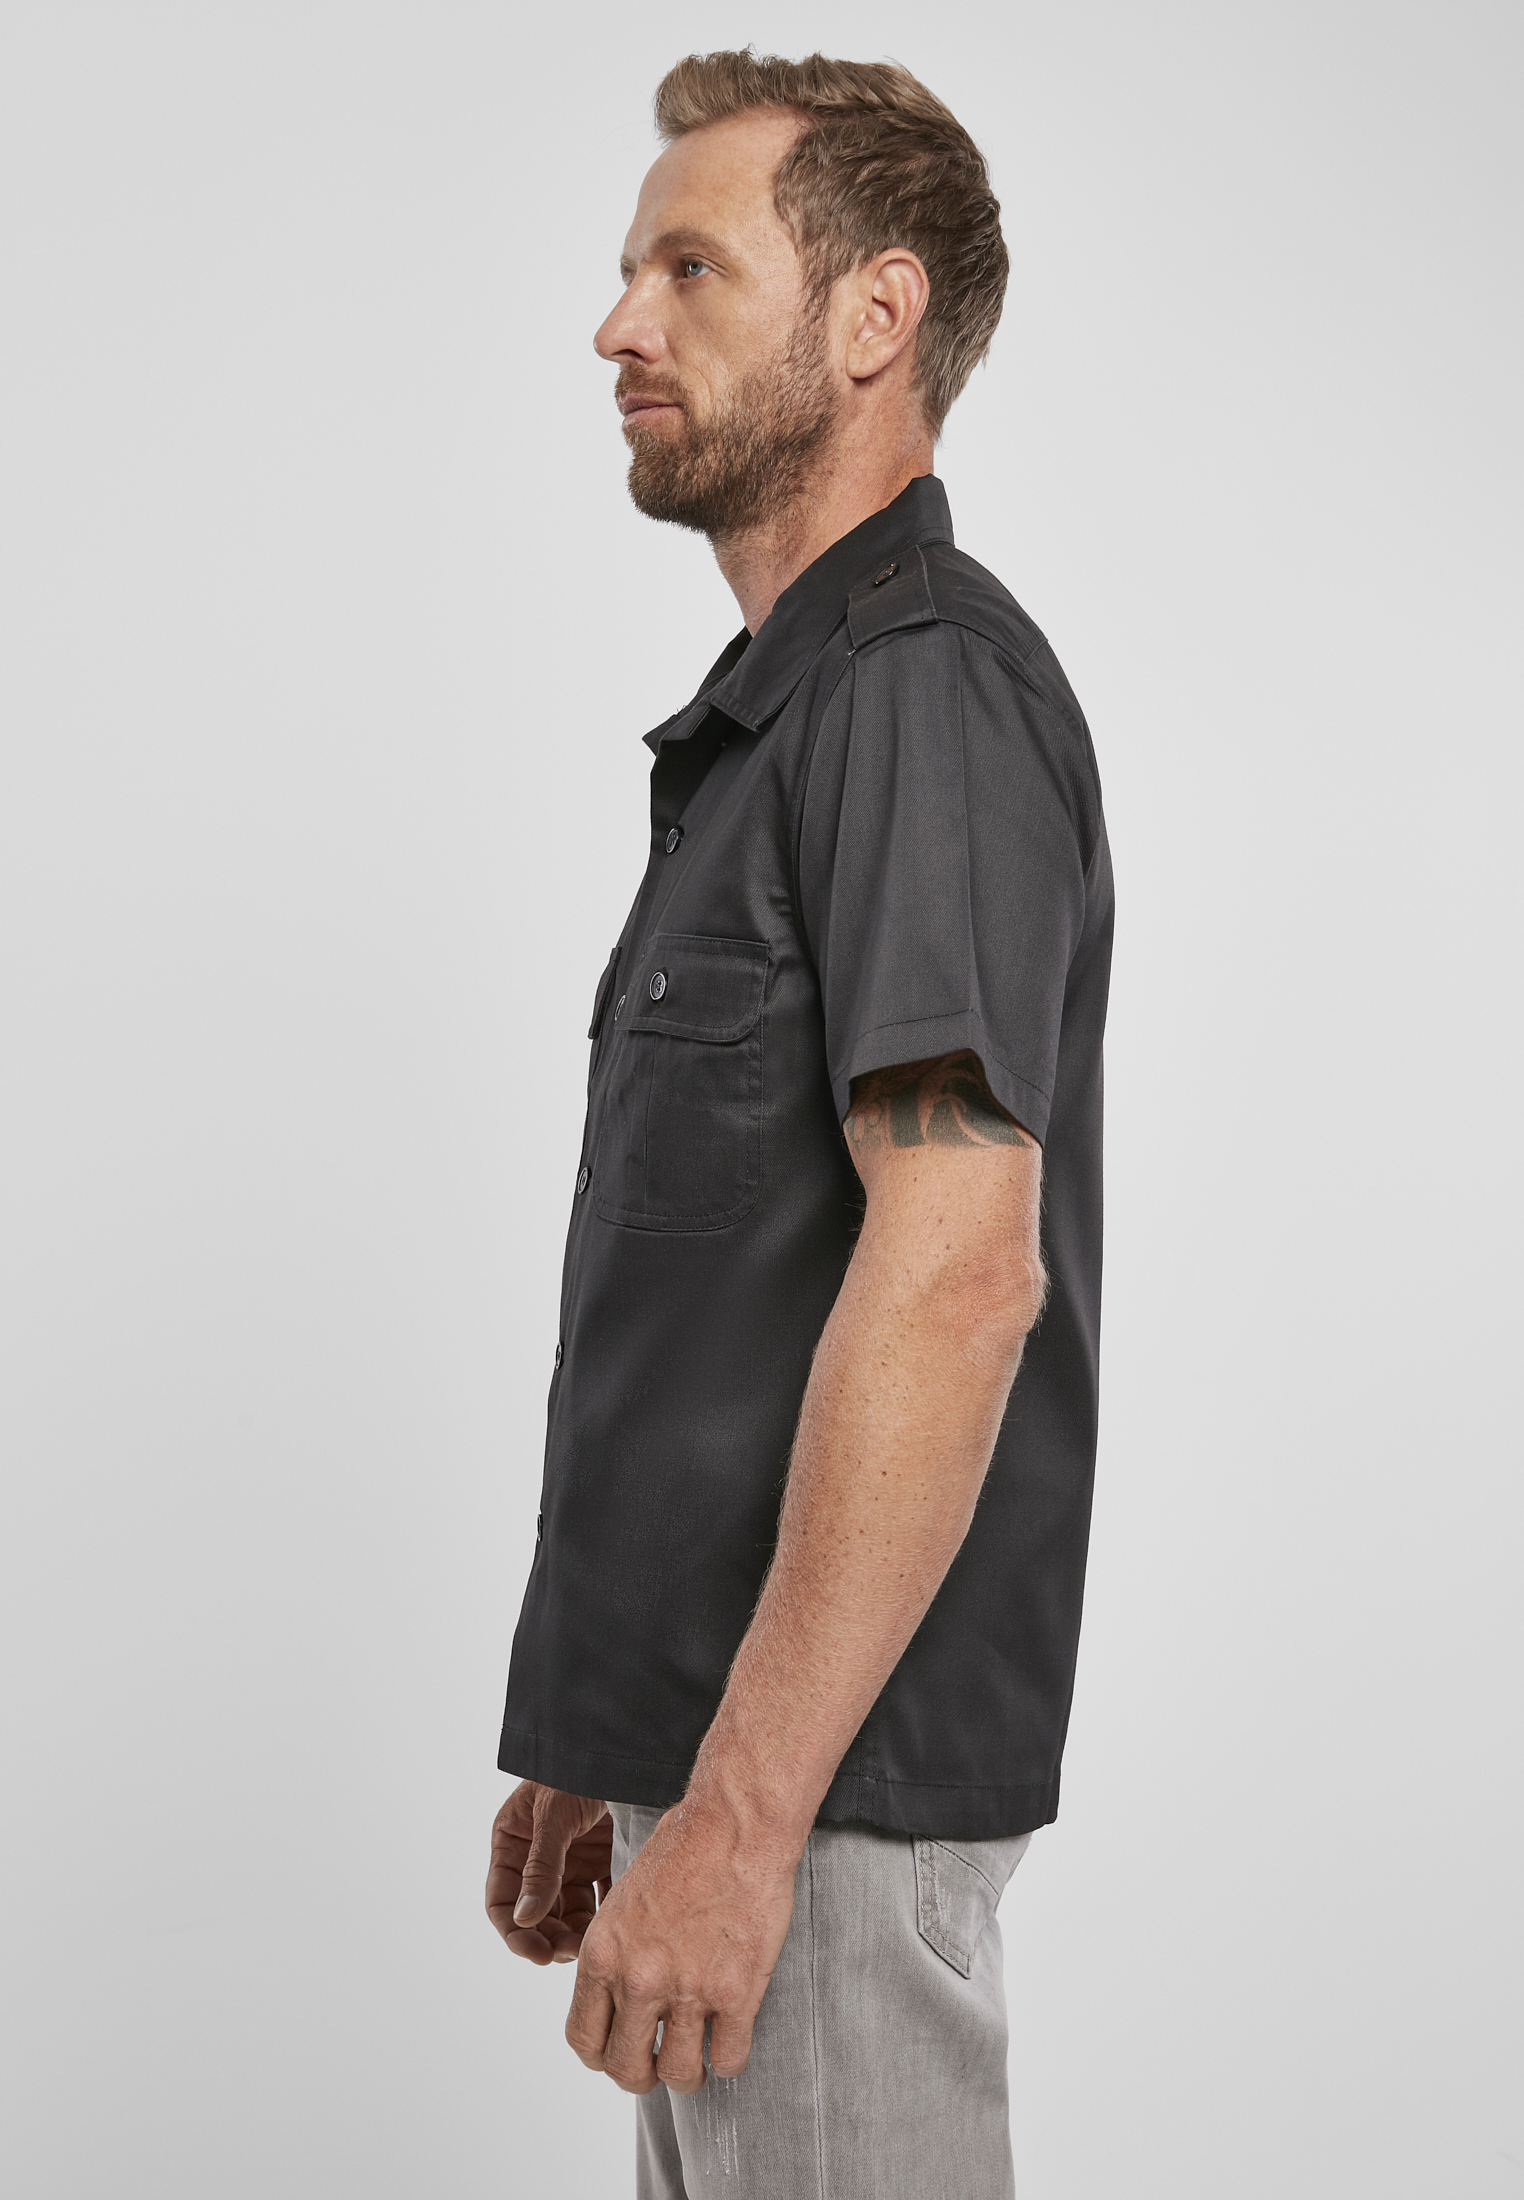 Hemden Short Sleeves US Shirt in Farbe black